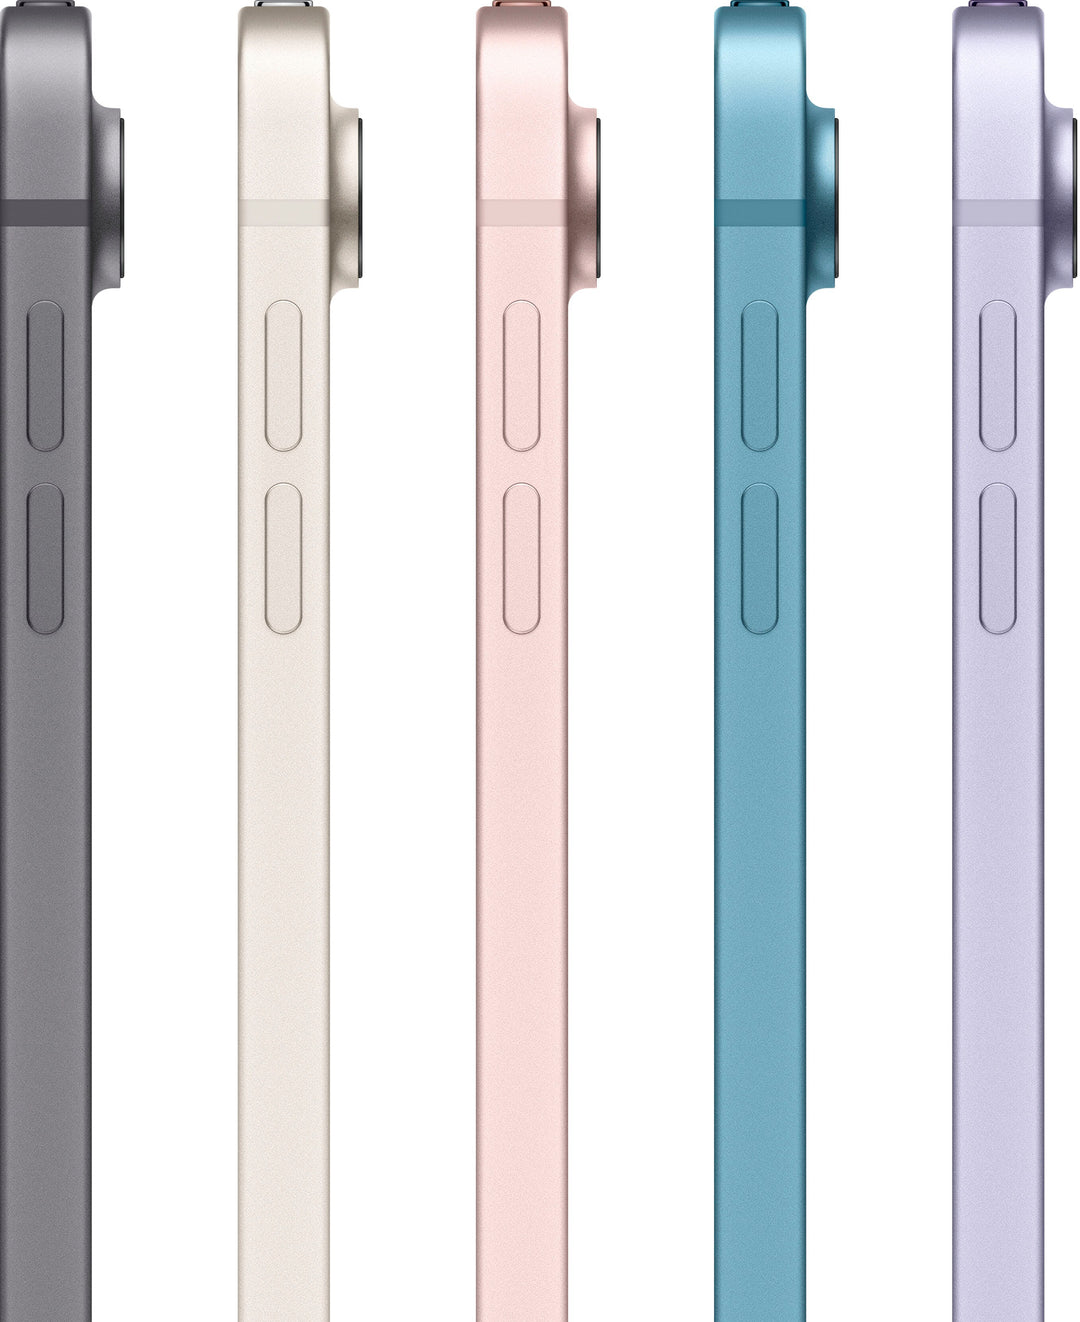 Apple - 10.9-Inch iPad Air - Latest Model - (5th Generation) with Wi-Fi + Cellular - 256GB - Pink (Unlocked)_6